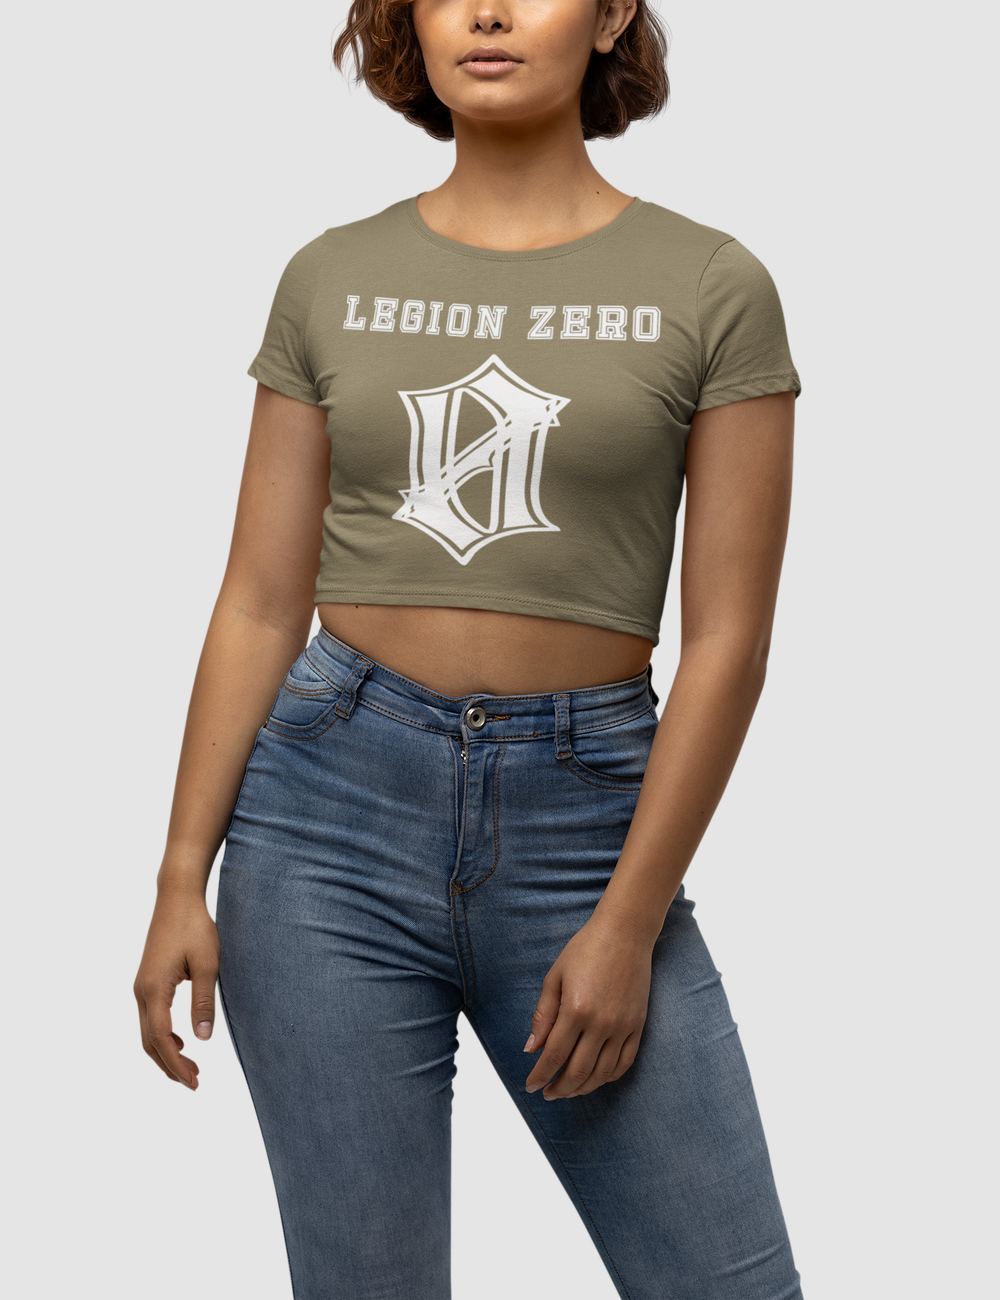 Legion Zero | Women's Fitted Crop Top T-Shirt OniTakai